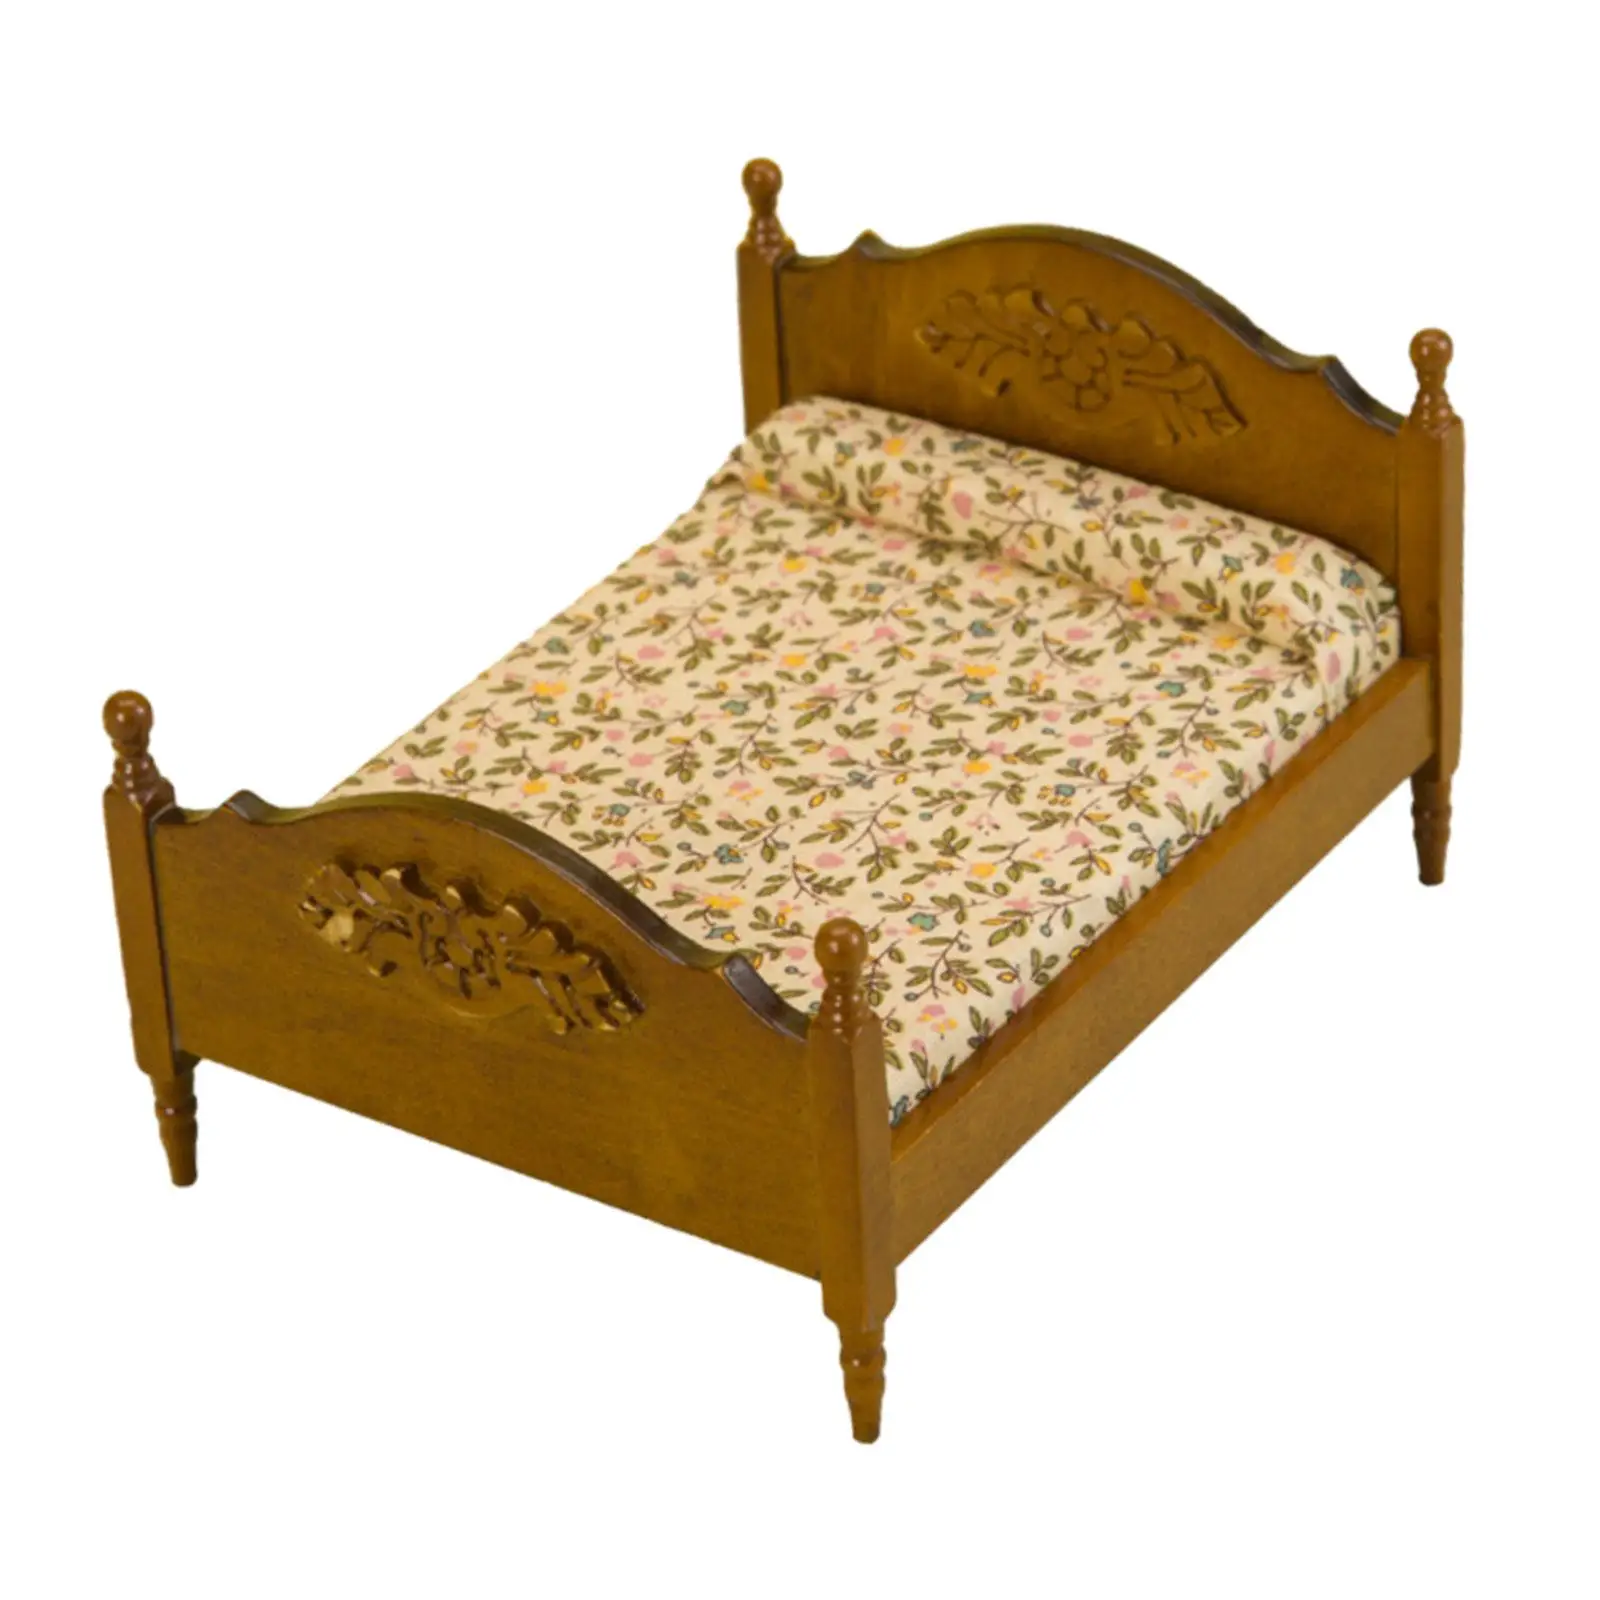 1/12 Dollhouse Bed, Wooden Mini Bed, DIY Scene Accessories, Dollhouse Miniature Bed Wooden Bed Model for Bedroom Room,